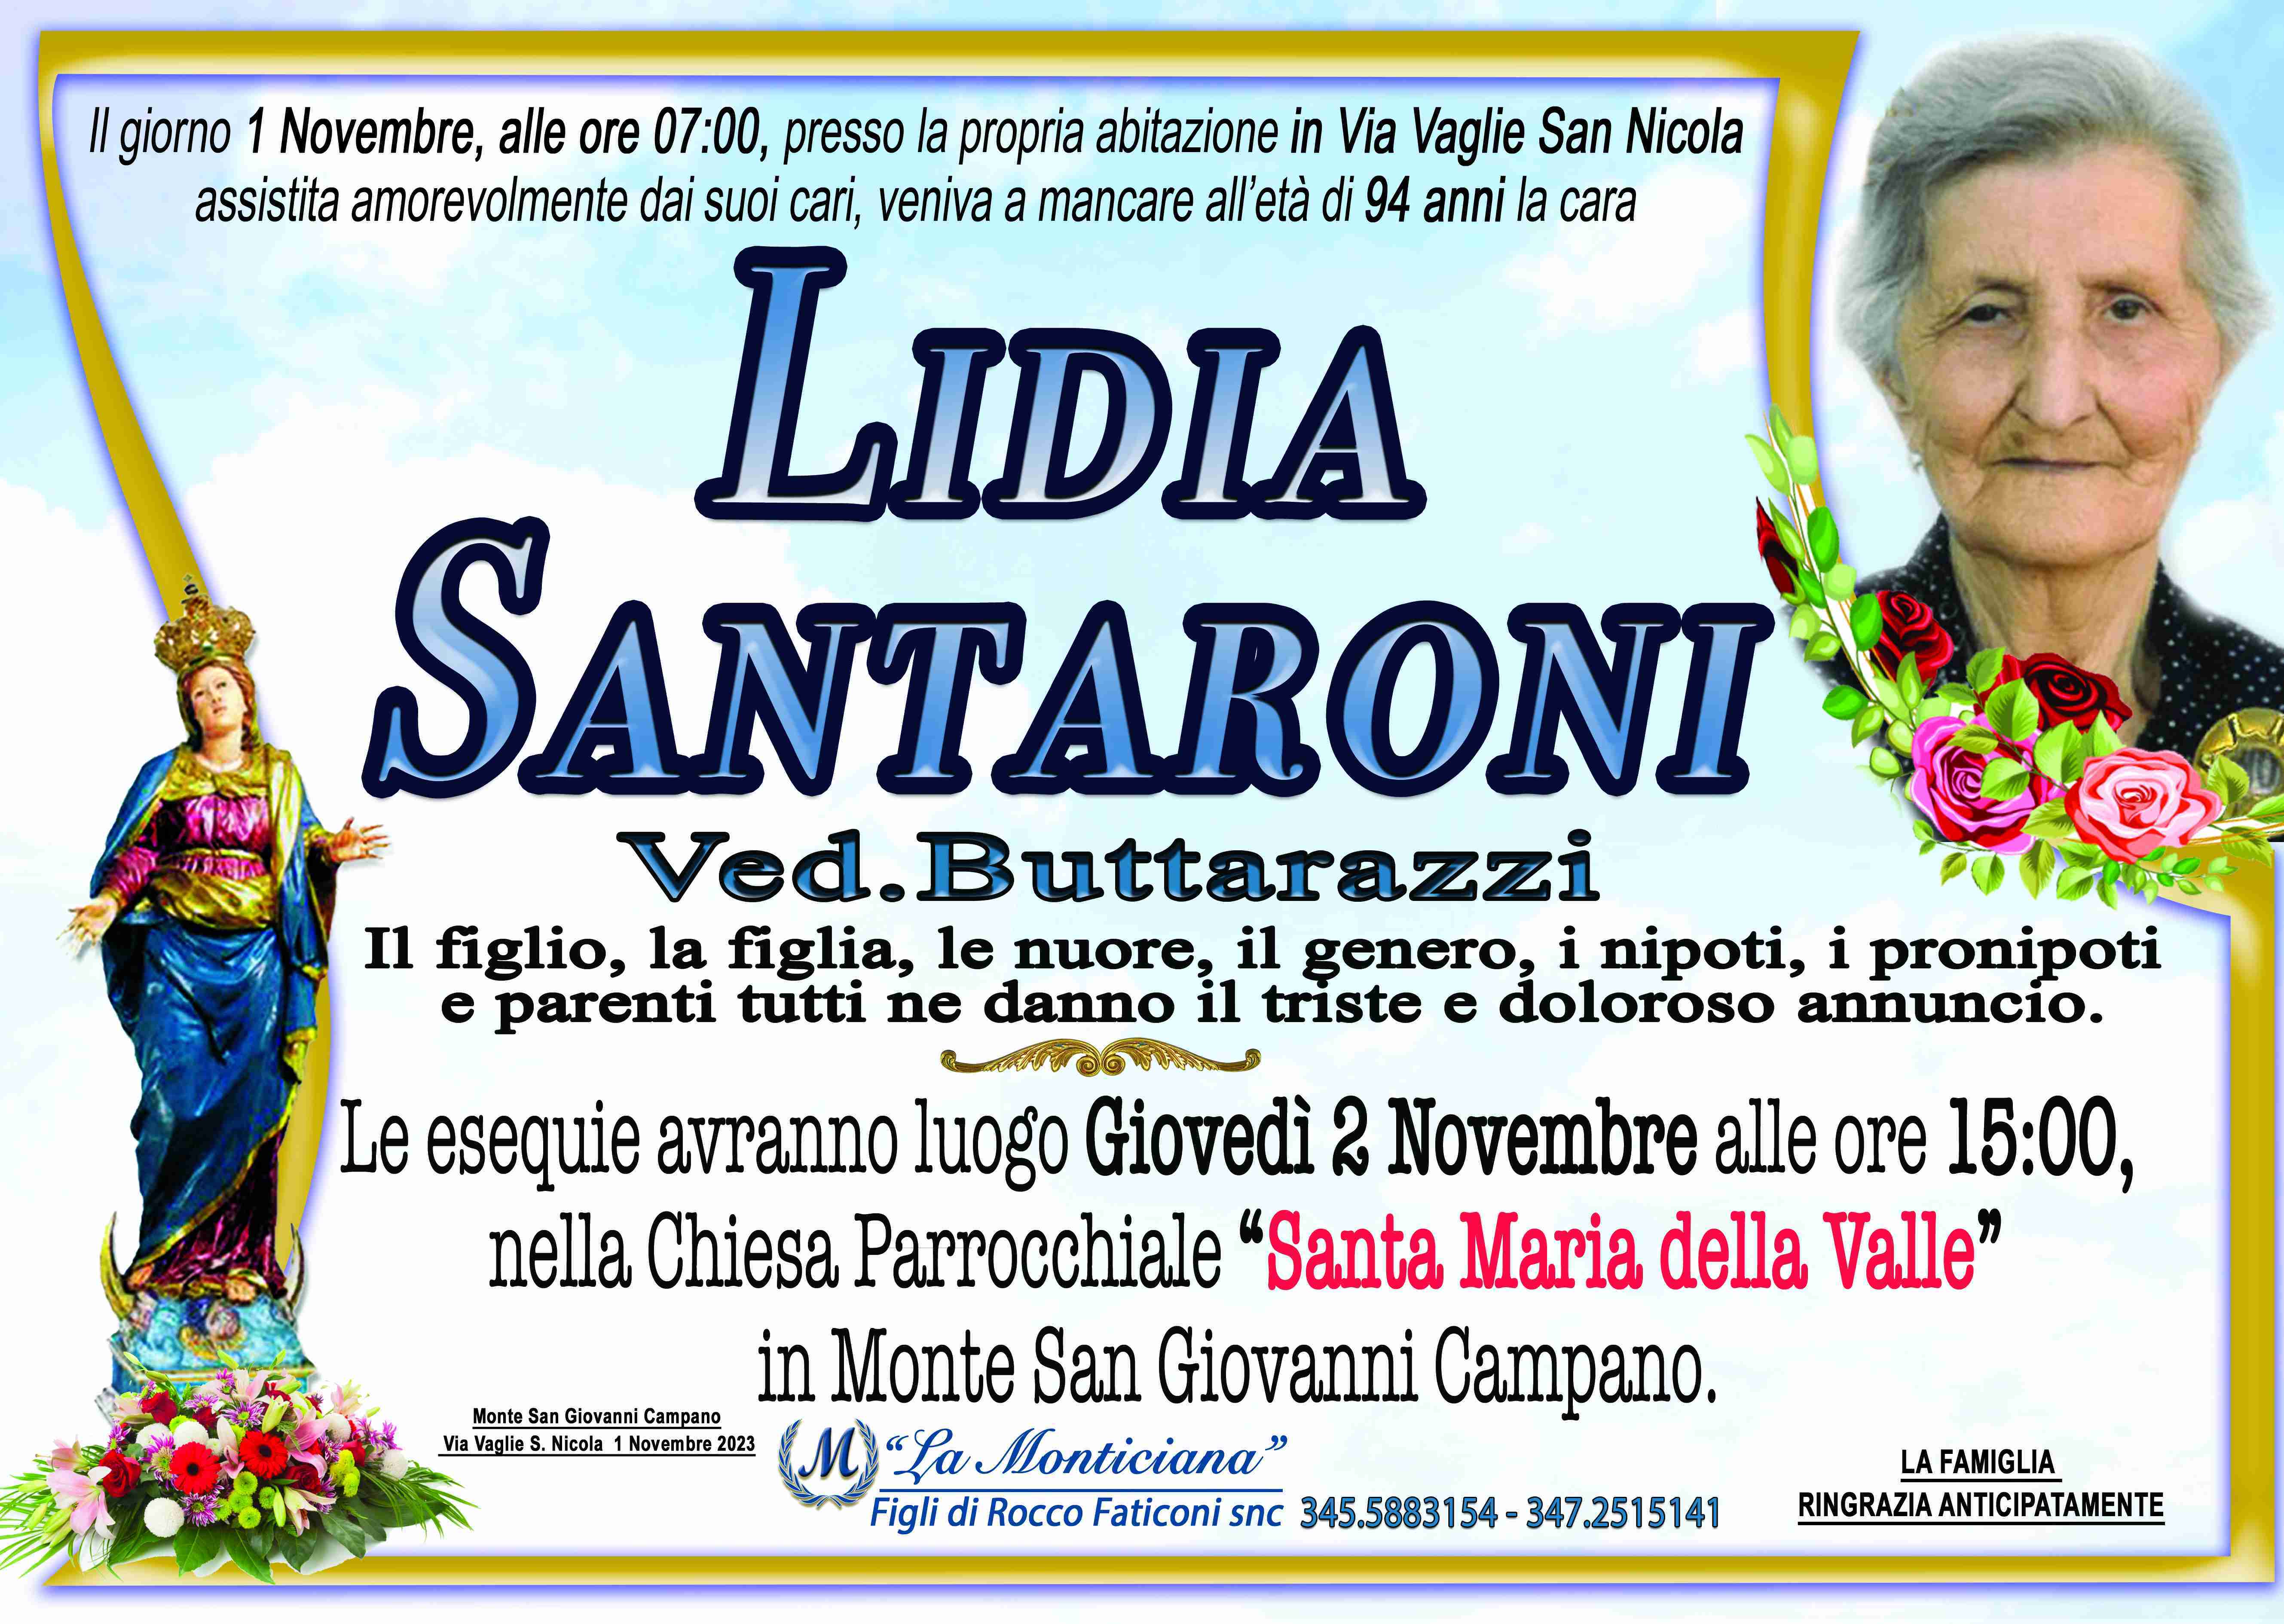 Lidia Santaroni